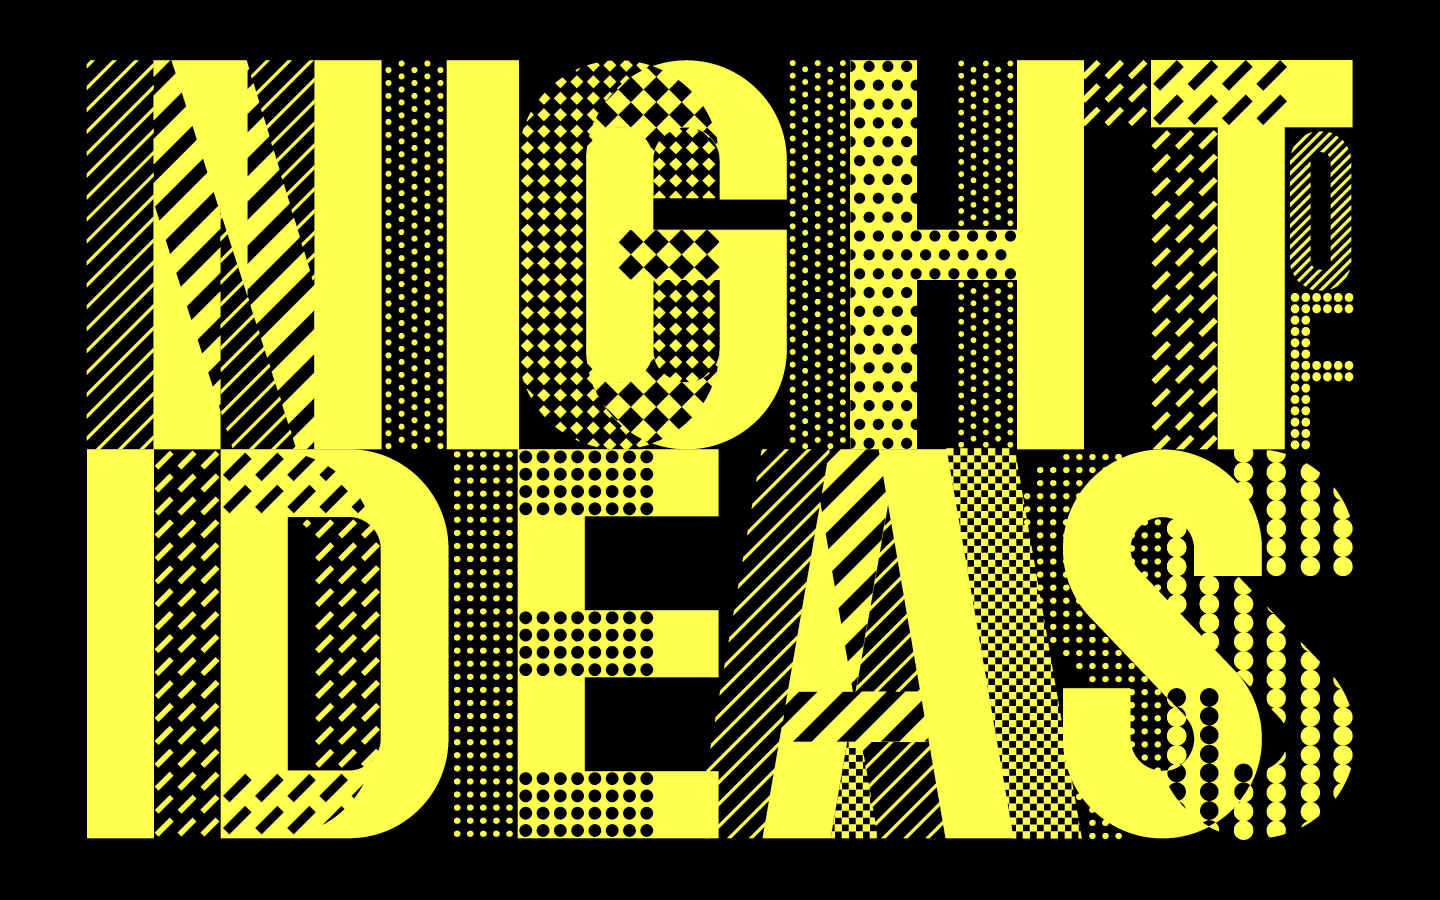 Centre Pompidou Museum's Night of Ideas Event Hudson County